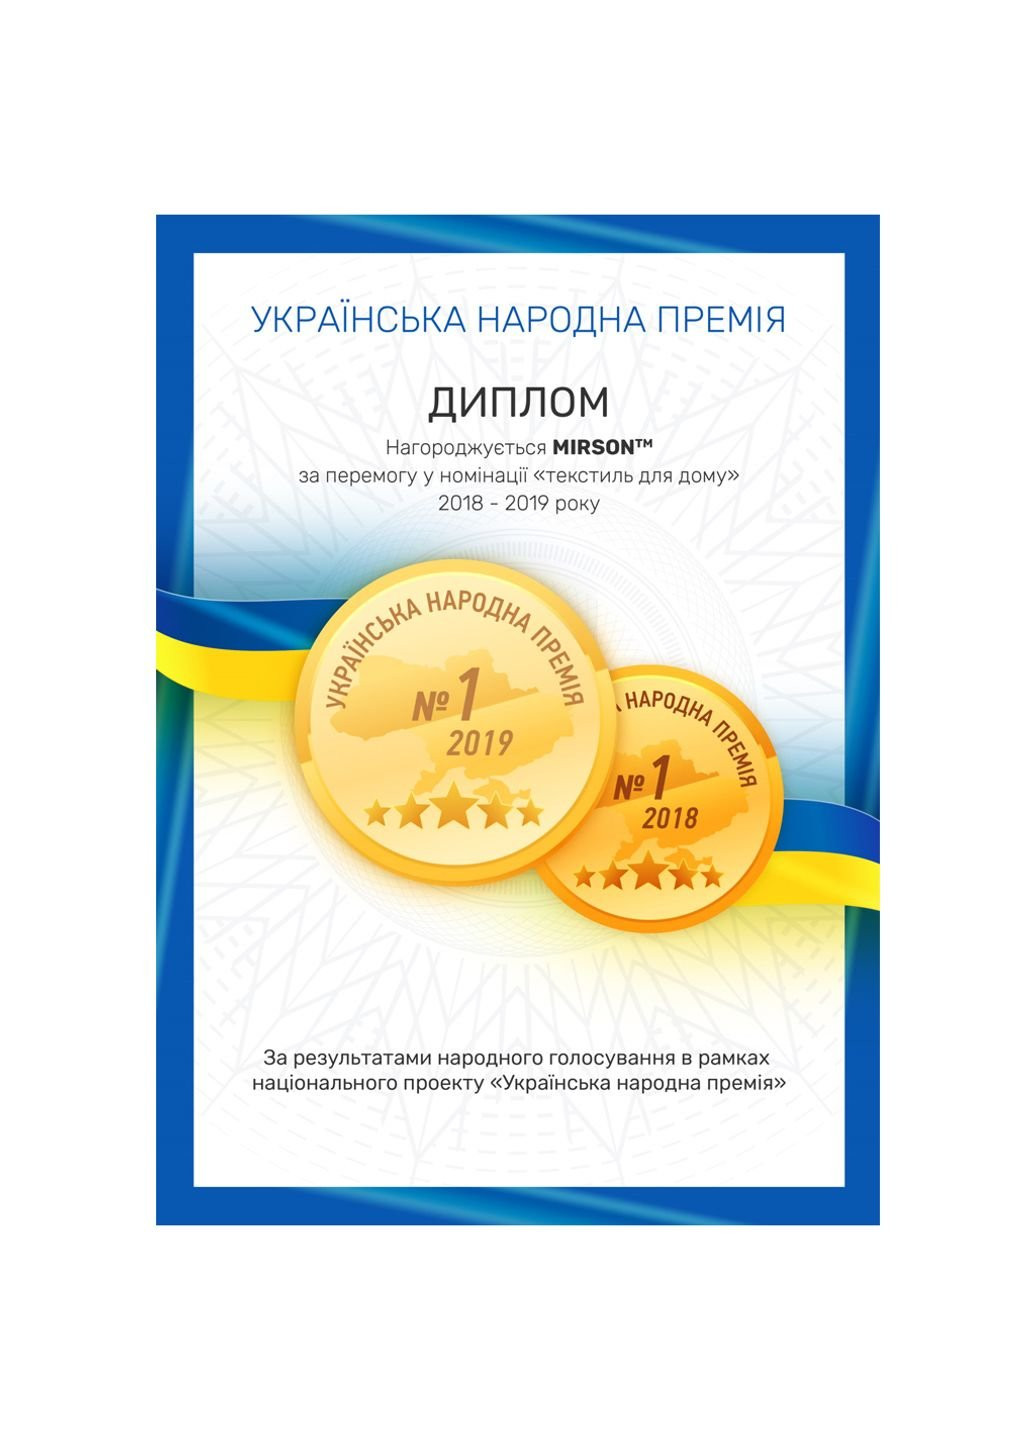 No Brand полотенце mirson банное №5000 softness bordo 100x150 см (2200003181180) красный производство - Украина